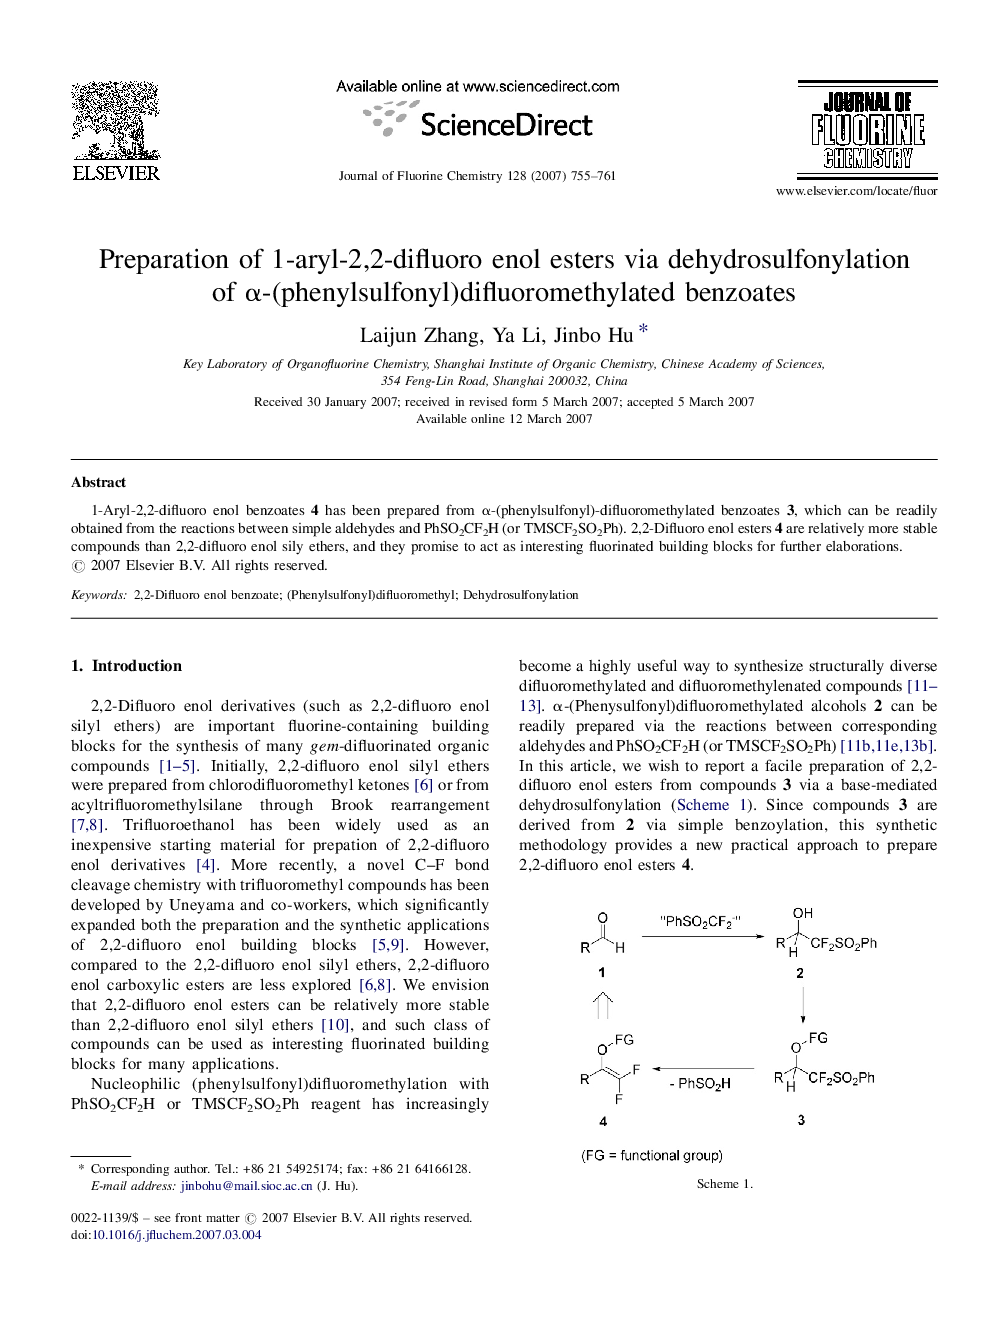 Preparation of 1-aryl-2,2-difluoro enol esters via dehydrosulfonylation of α-(phenylsulfonyl)difluoromethylated benzoates